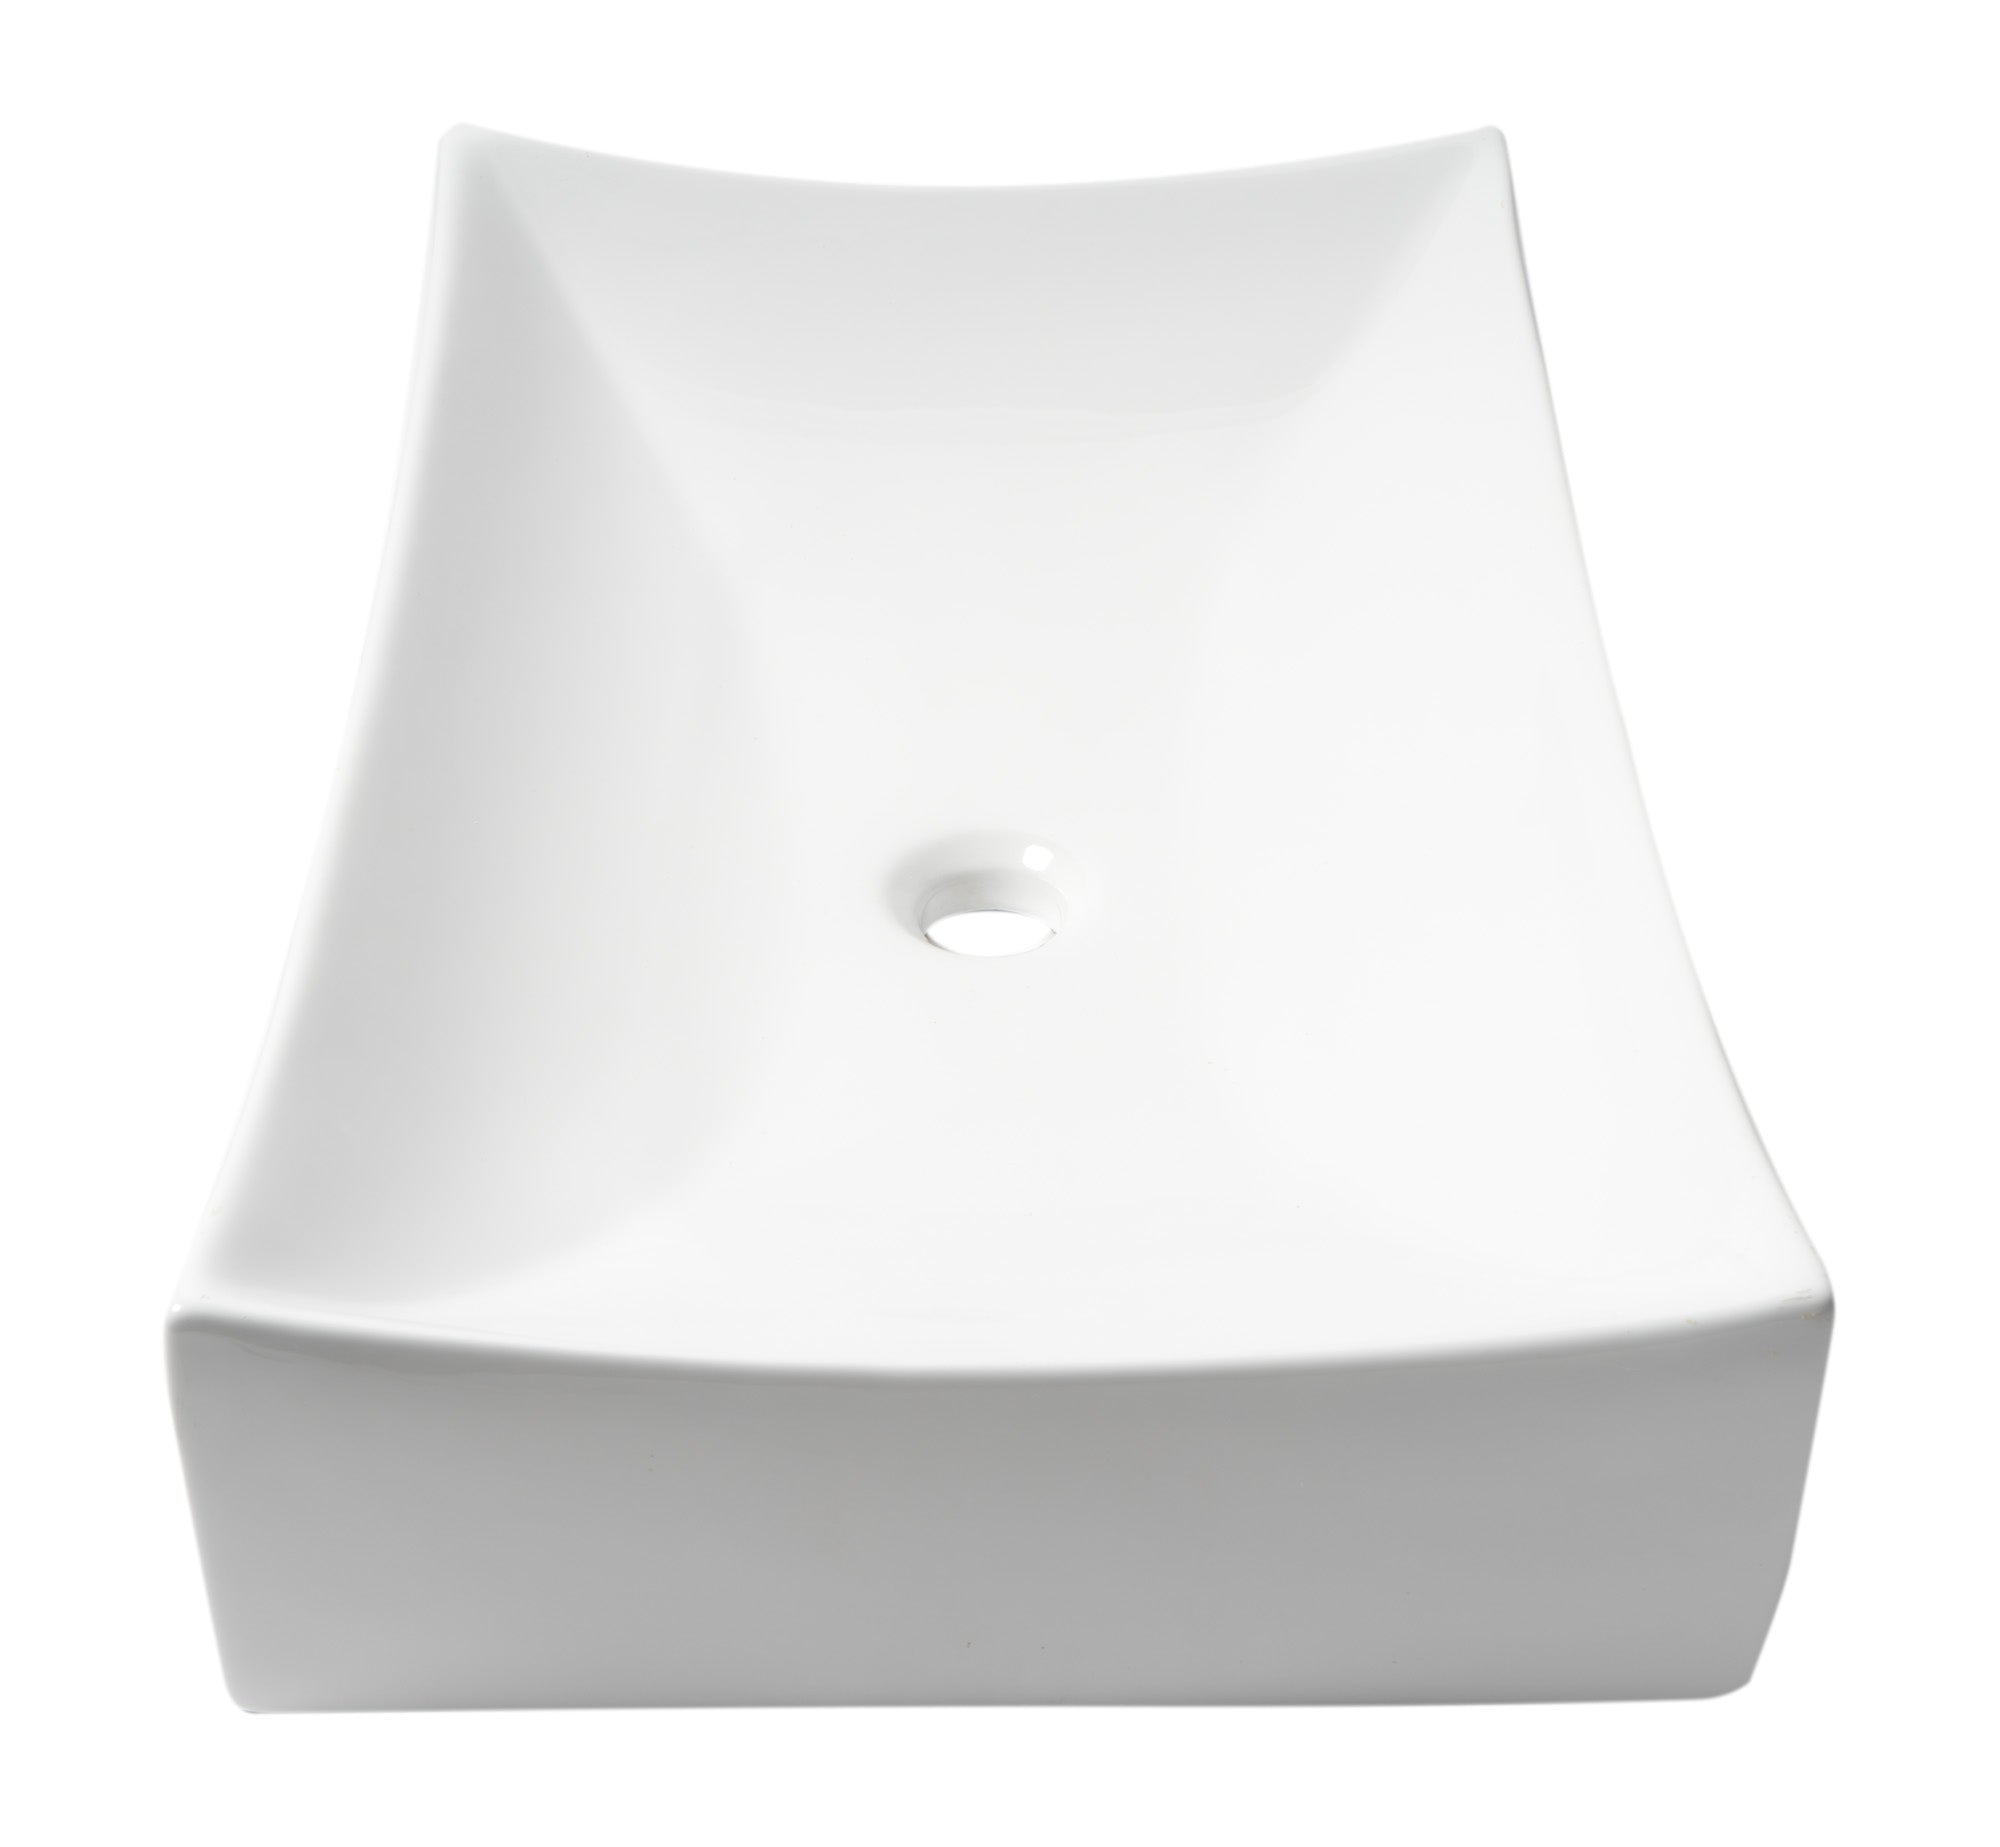 ALFI brand ABC904 White 26Inch Fancy Rectangular Above Mount Ceramic Sink